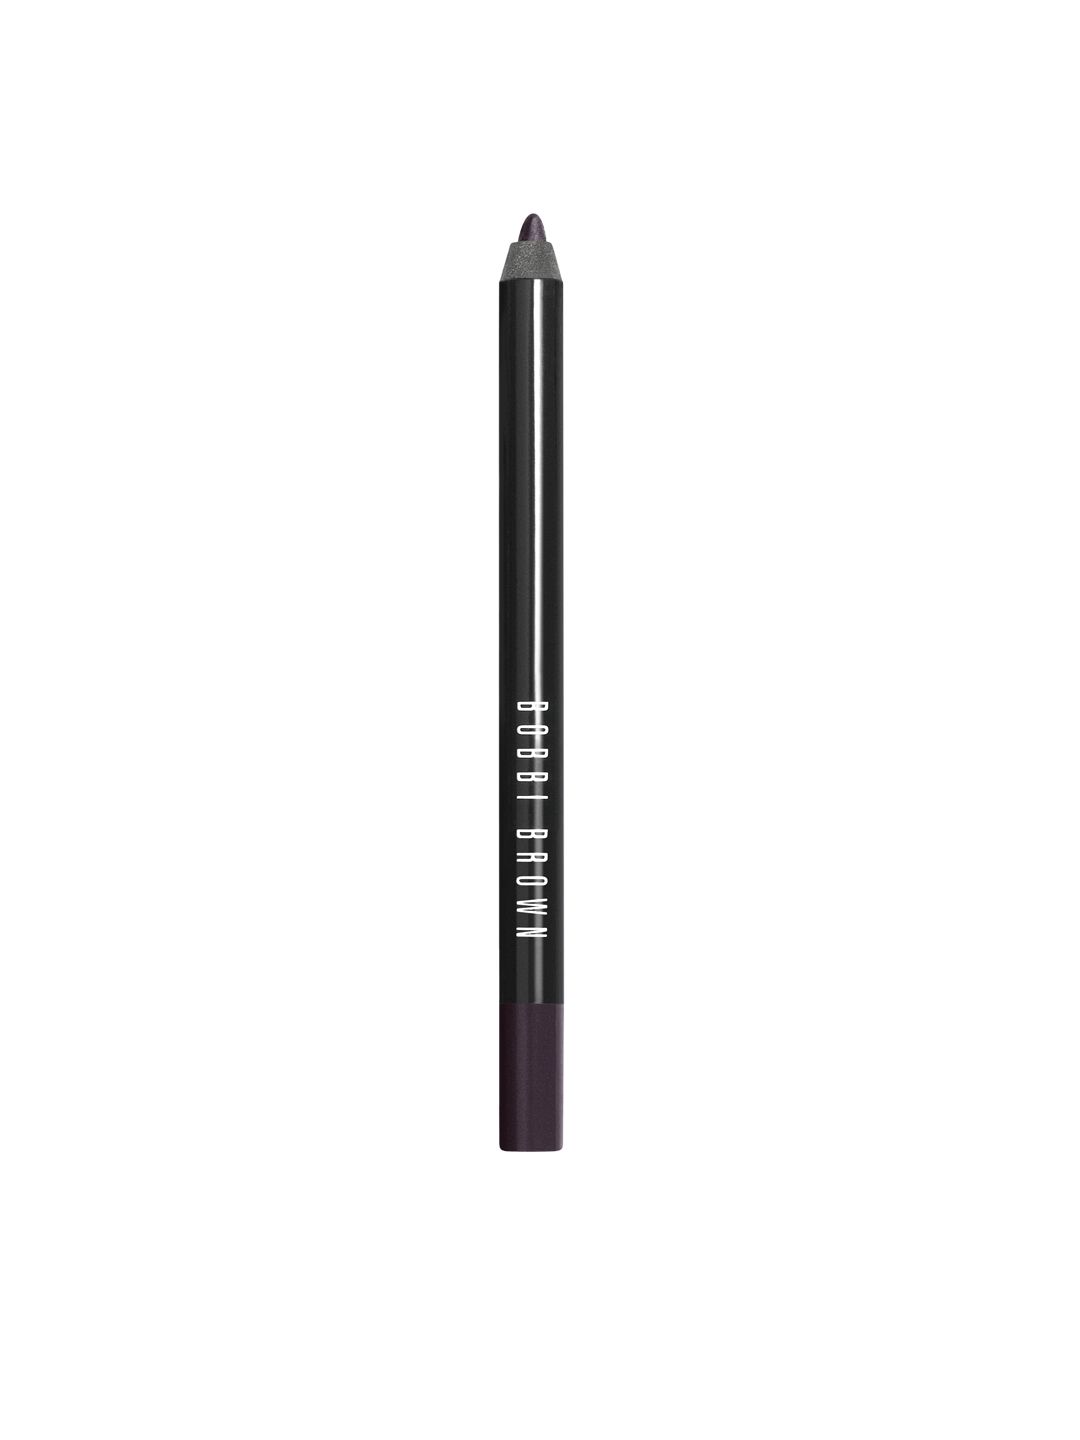 Bobbi Brown Long-Wear Eye Pencil, E811-02 Mahogany Price in India